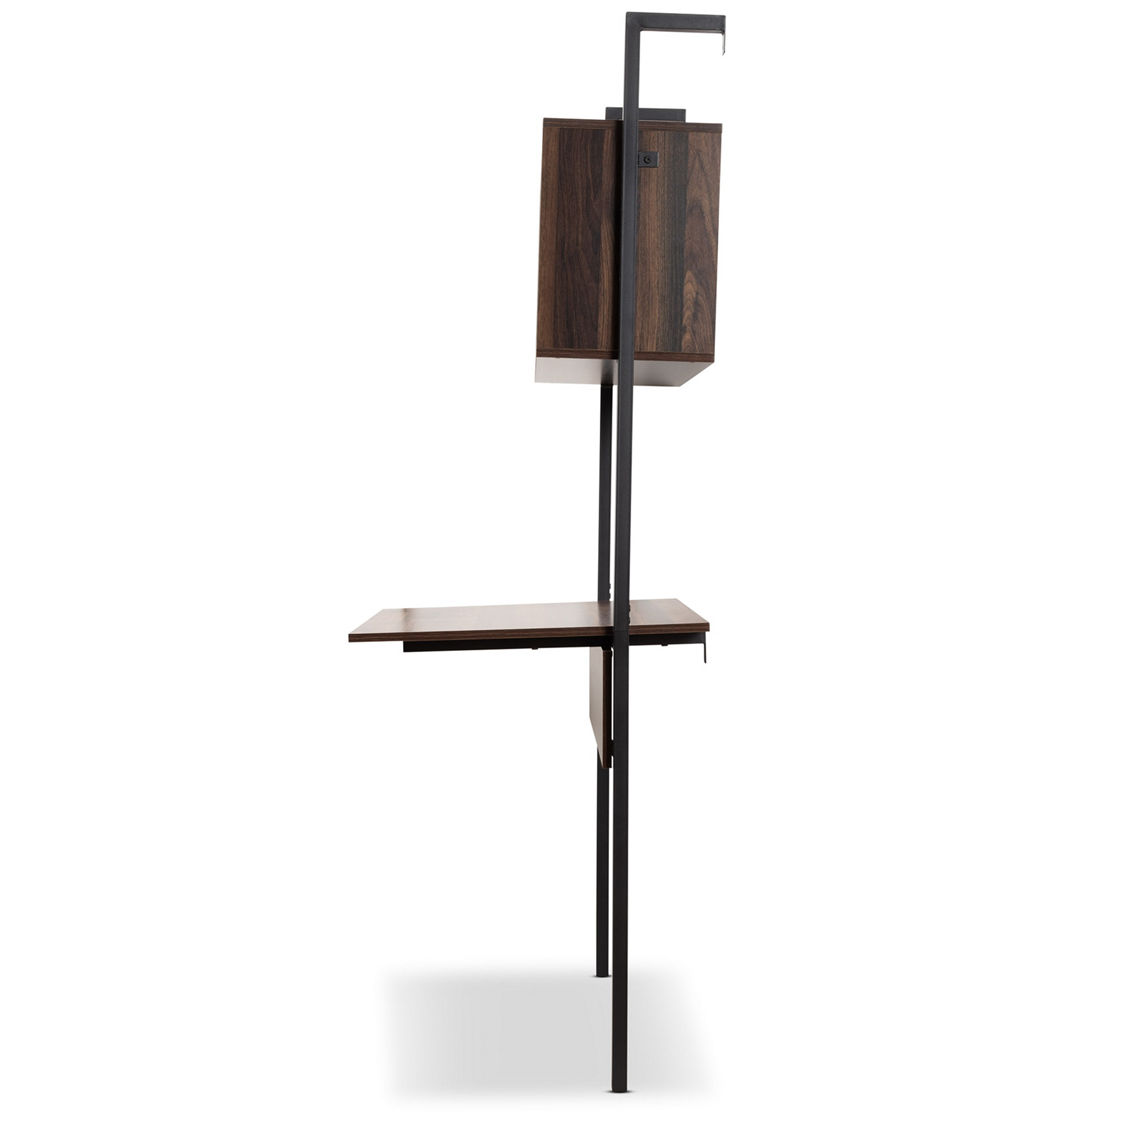 Baxton Studio Fariat Walnut Brown Wood and Black Metal Display Shelf with Desk - Image 3 of 5